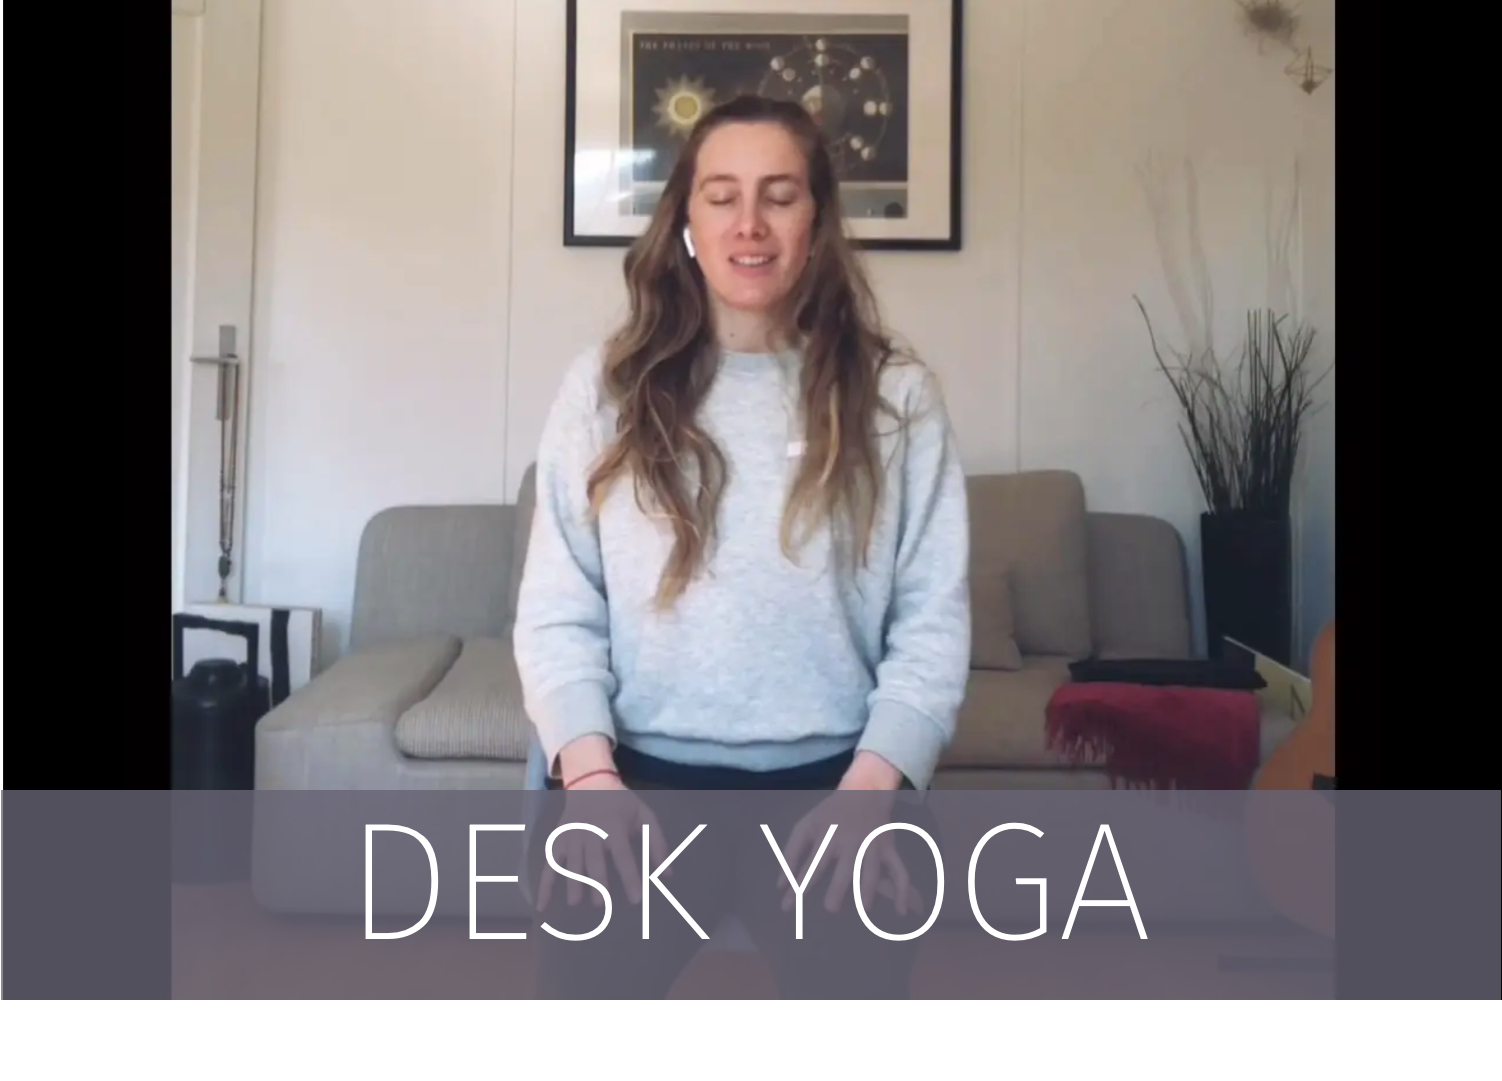 Desk Yoga